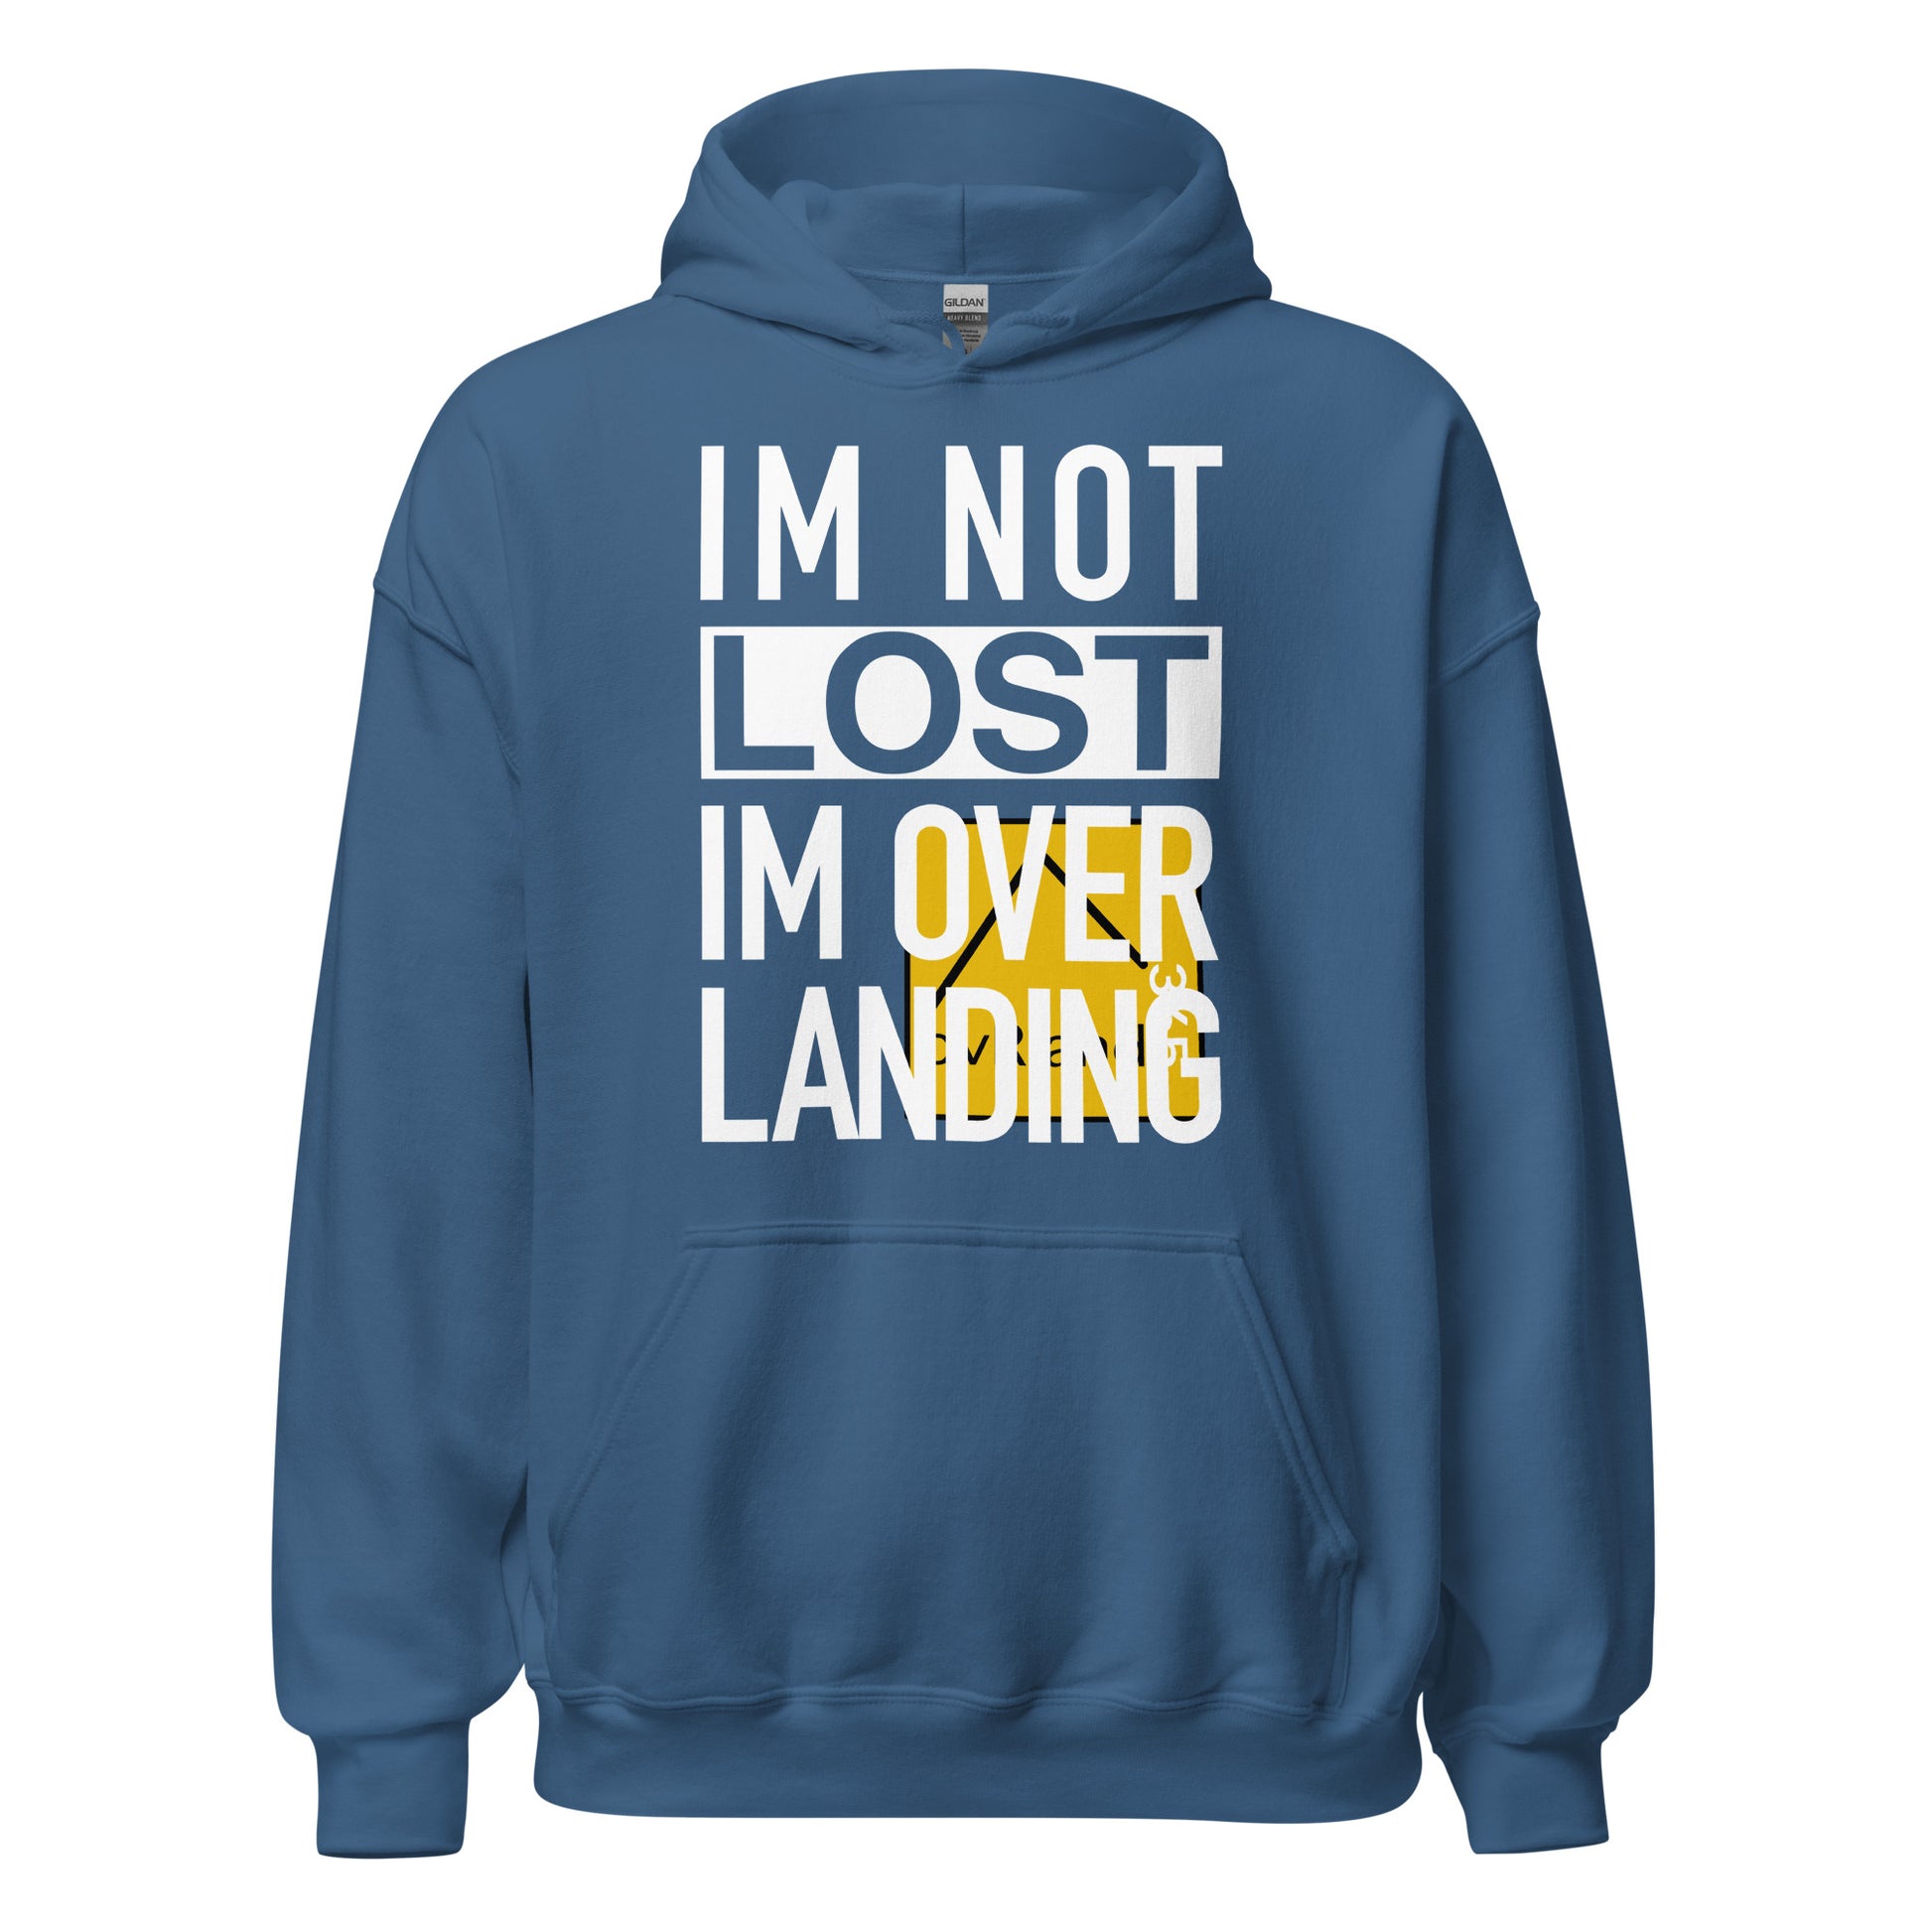 IM NOT LOST IM OVER LANDING - indigo blue hoodie with misprint logo. overland365.com